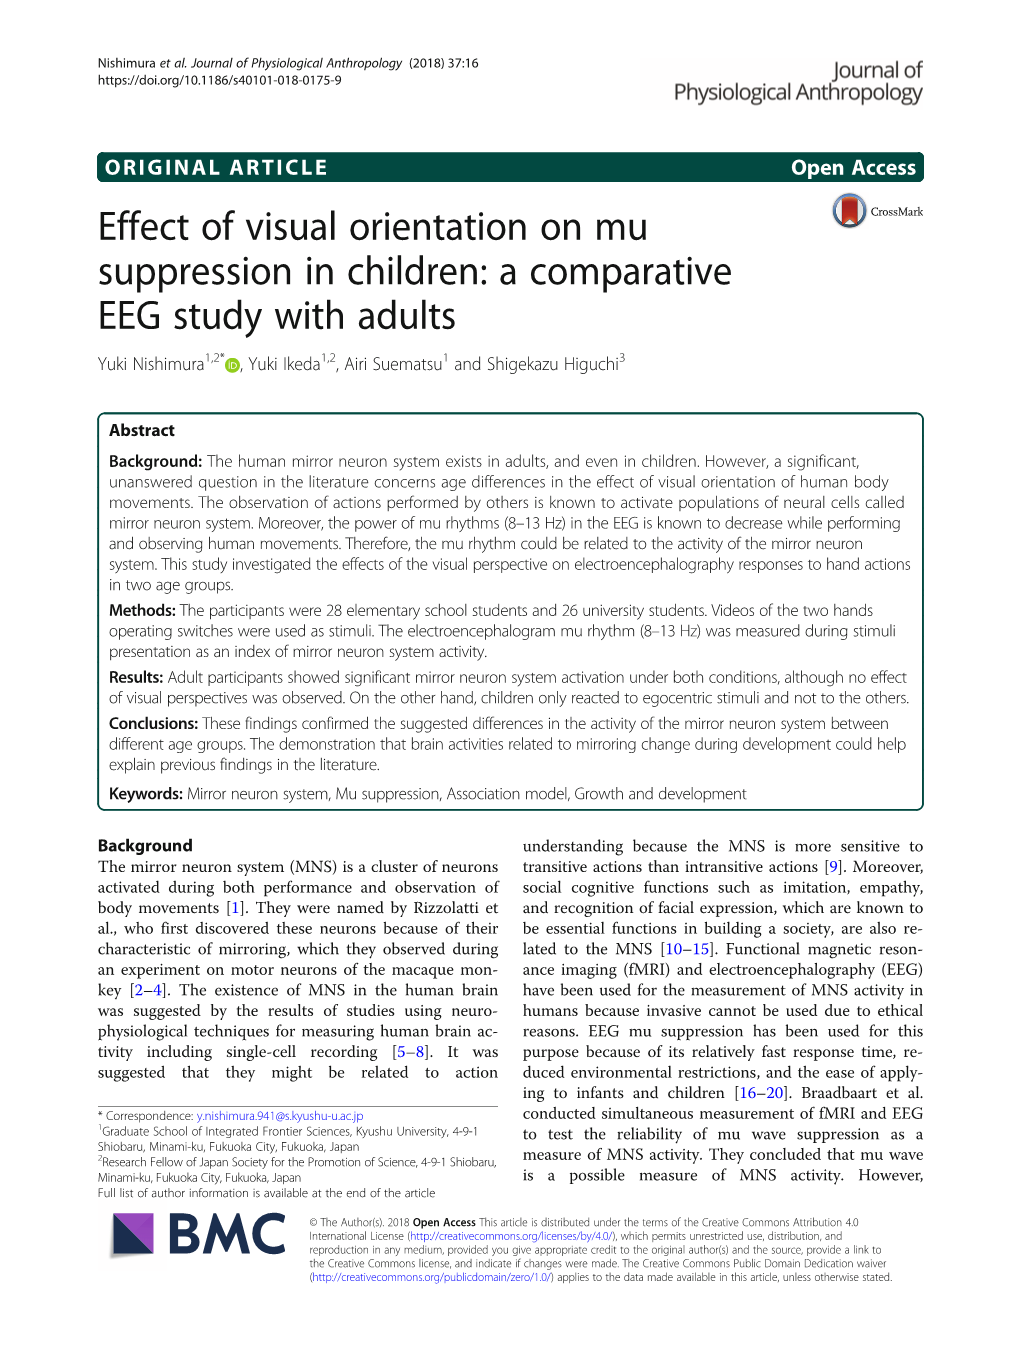 Effect of Visual Orientation on Mu Suppression in Children